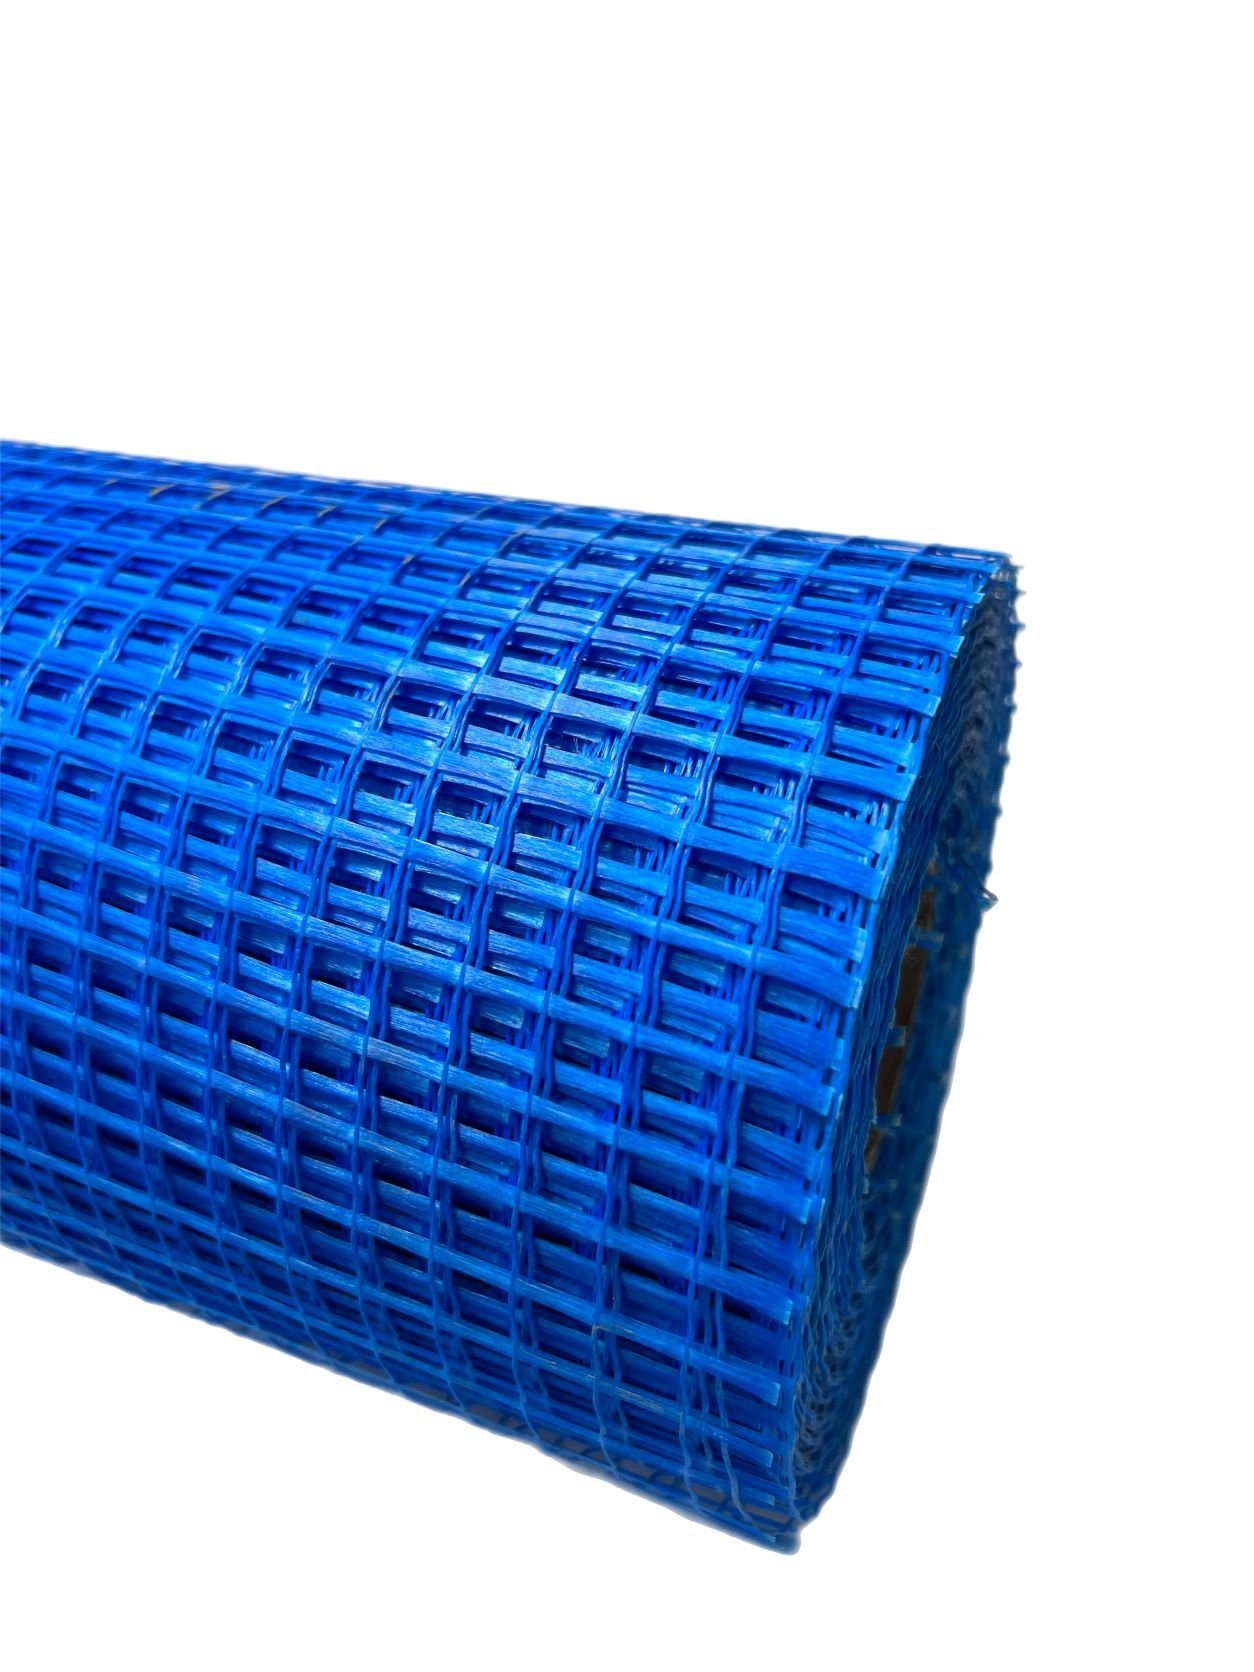 Blau Glaswolle VaGo-Tools Glasfasergewebe Putzgewebe 110g/m² 200m²